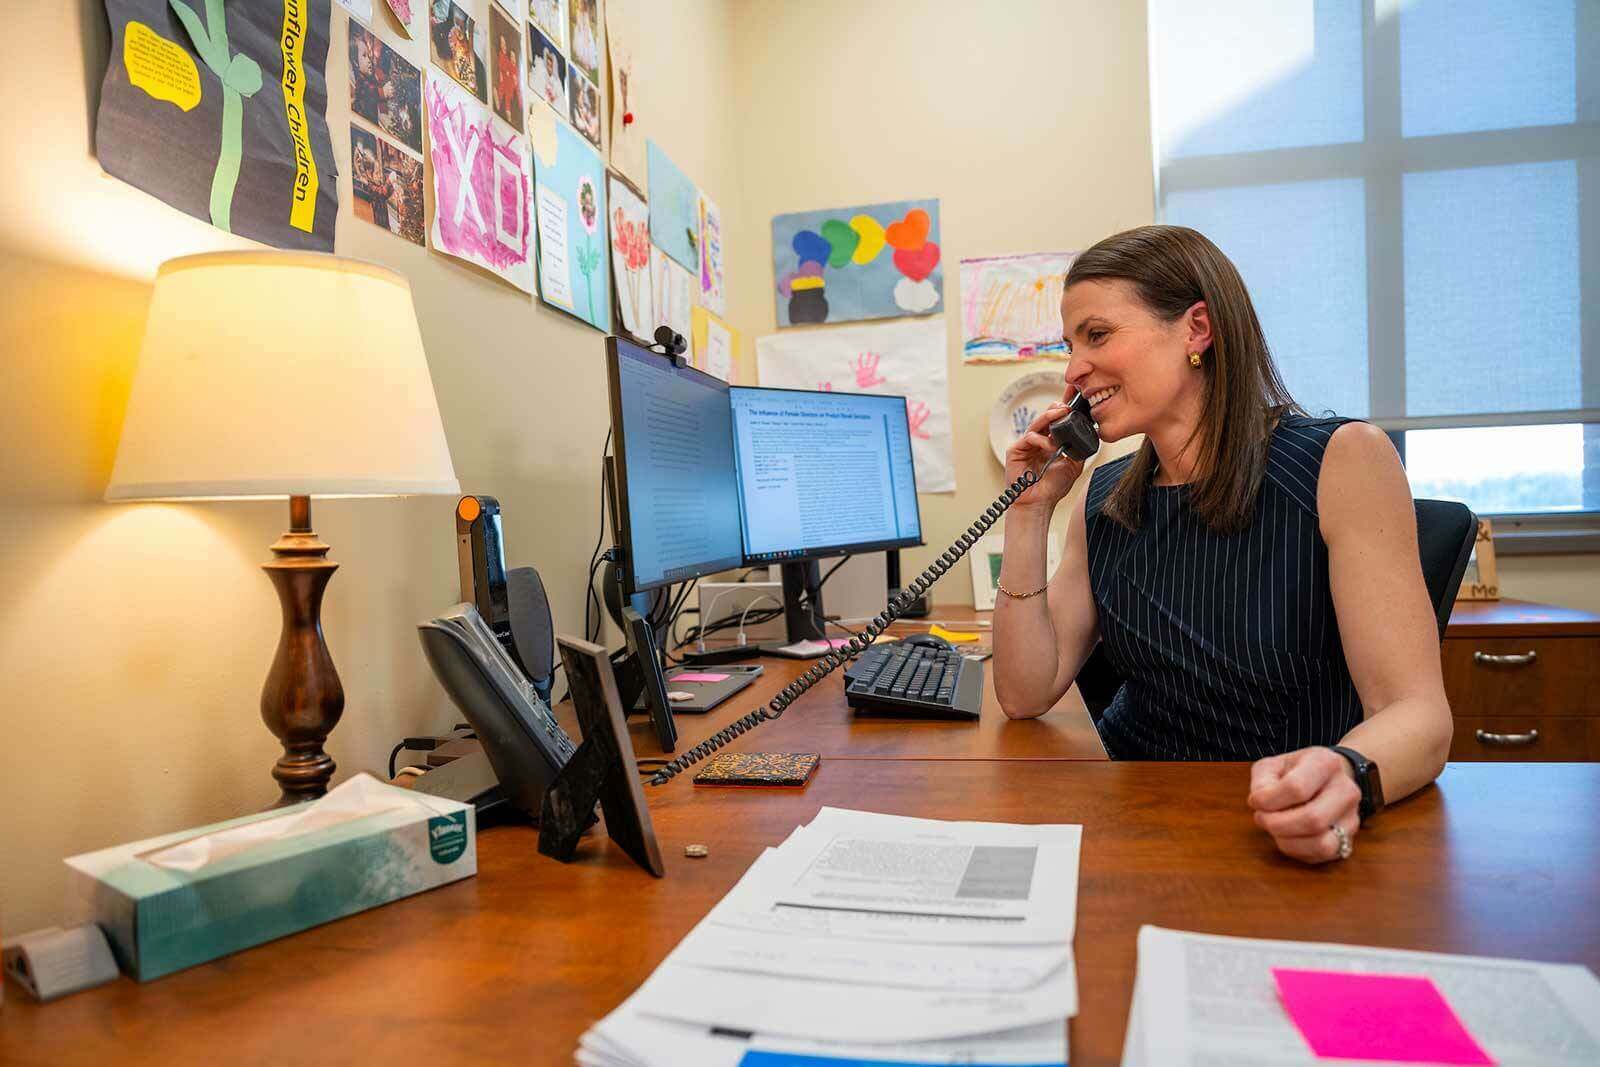 A woman talks on a phone at an office desk.